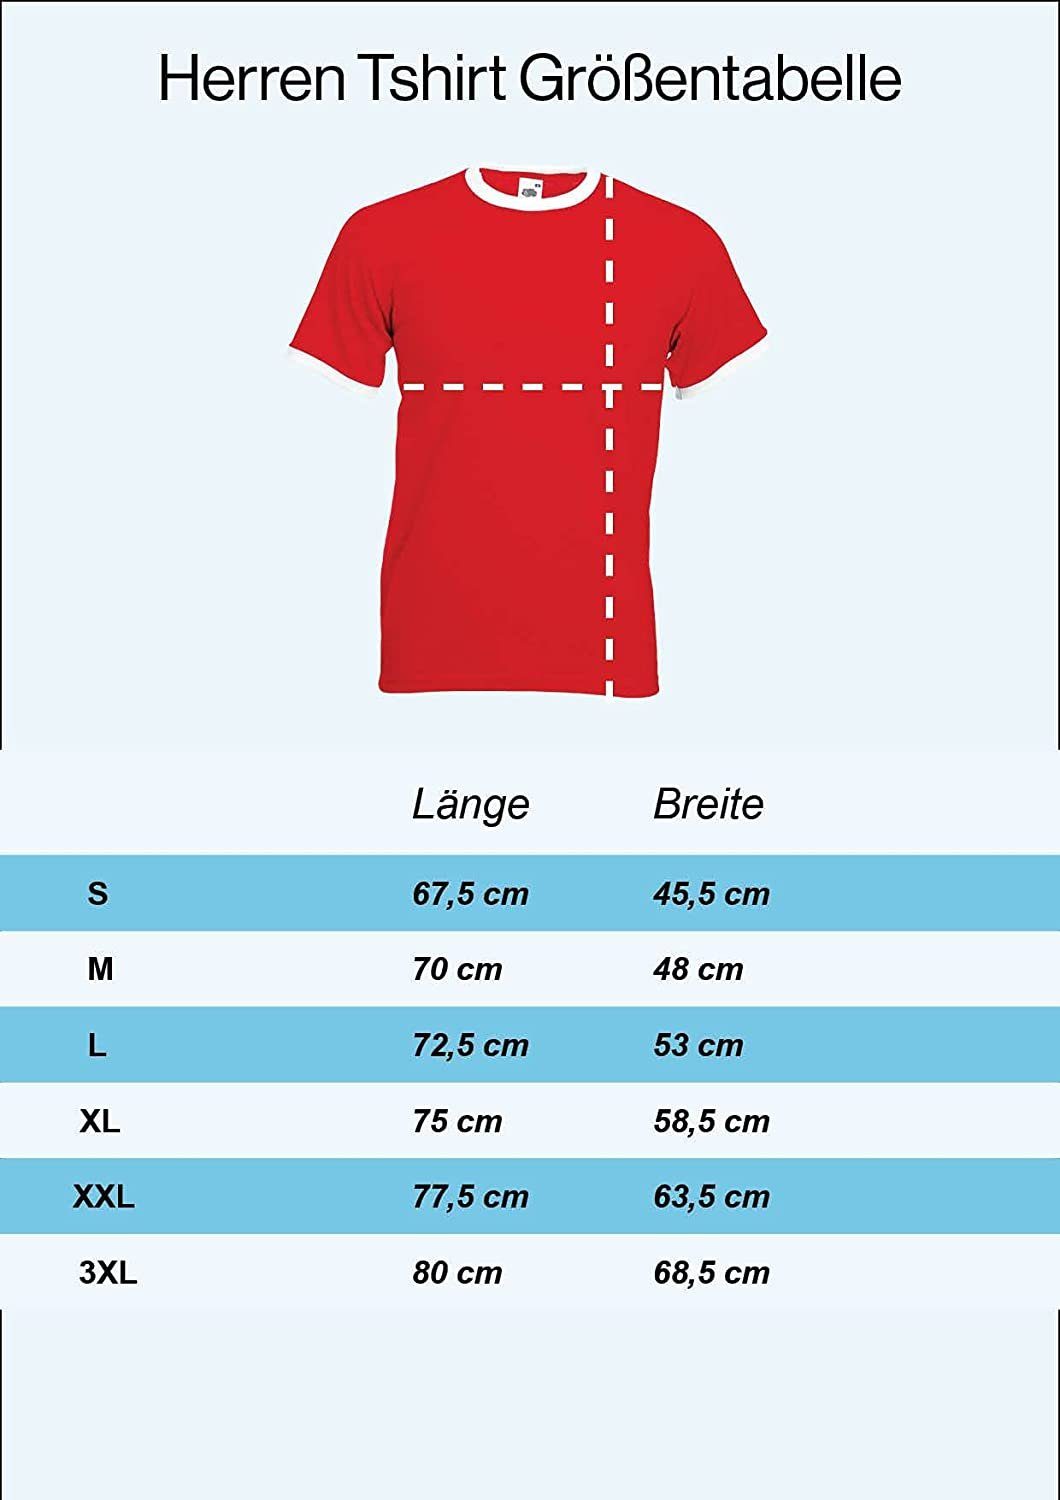 Designz T-Shirt T-Shirt Rot Fußball Herren im Print trendigem Trikot Look mit Serbien Youth